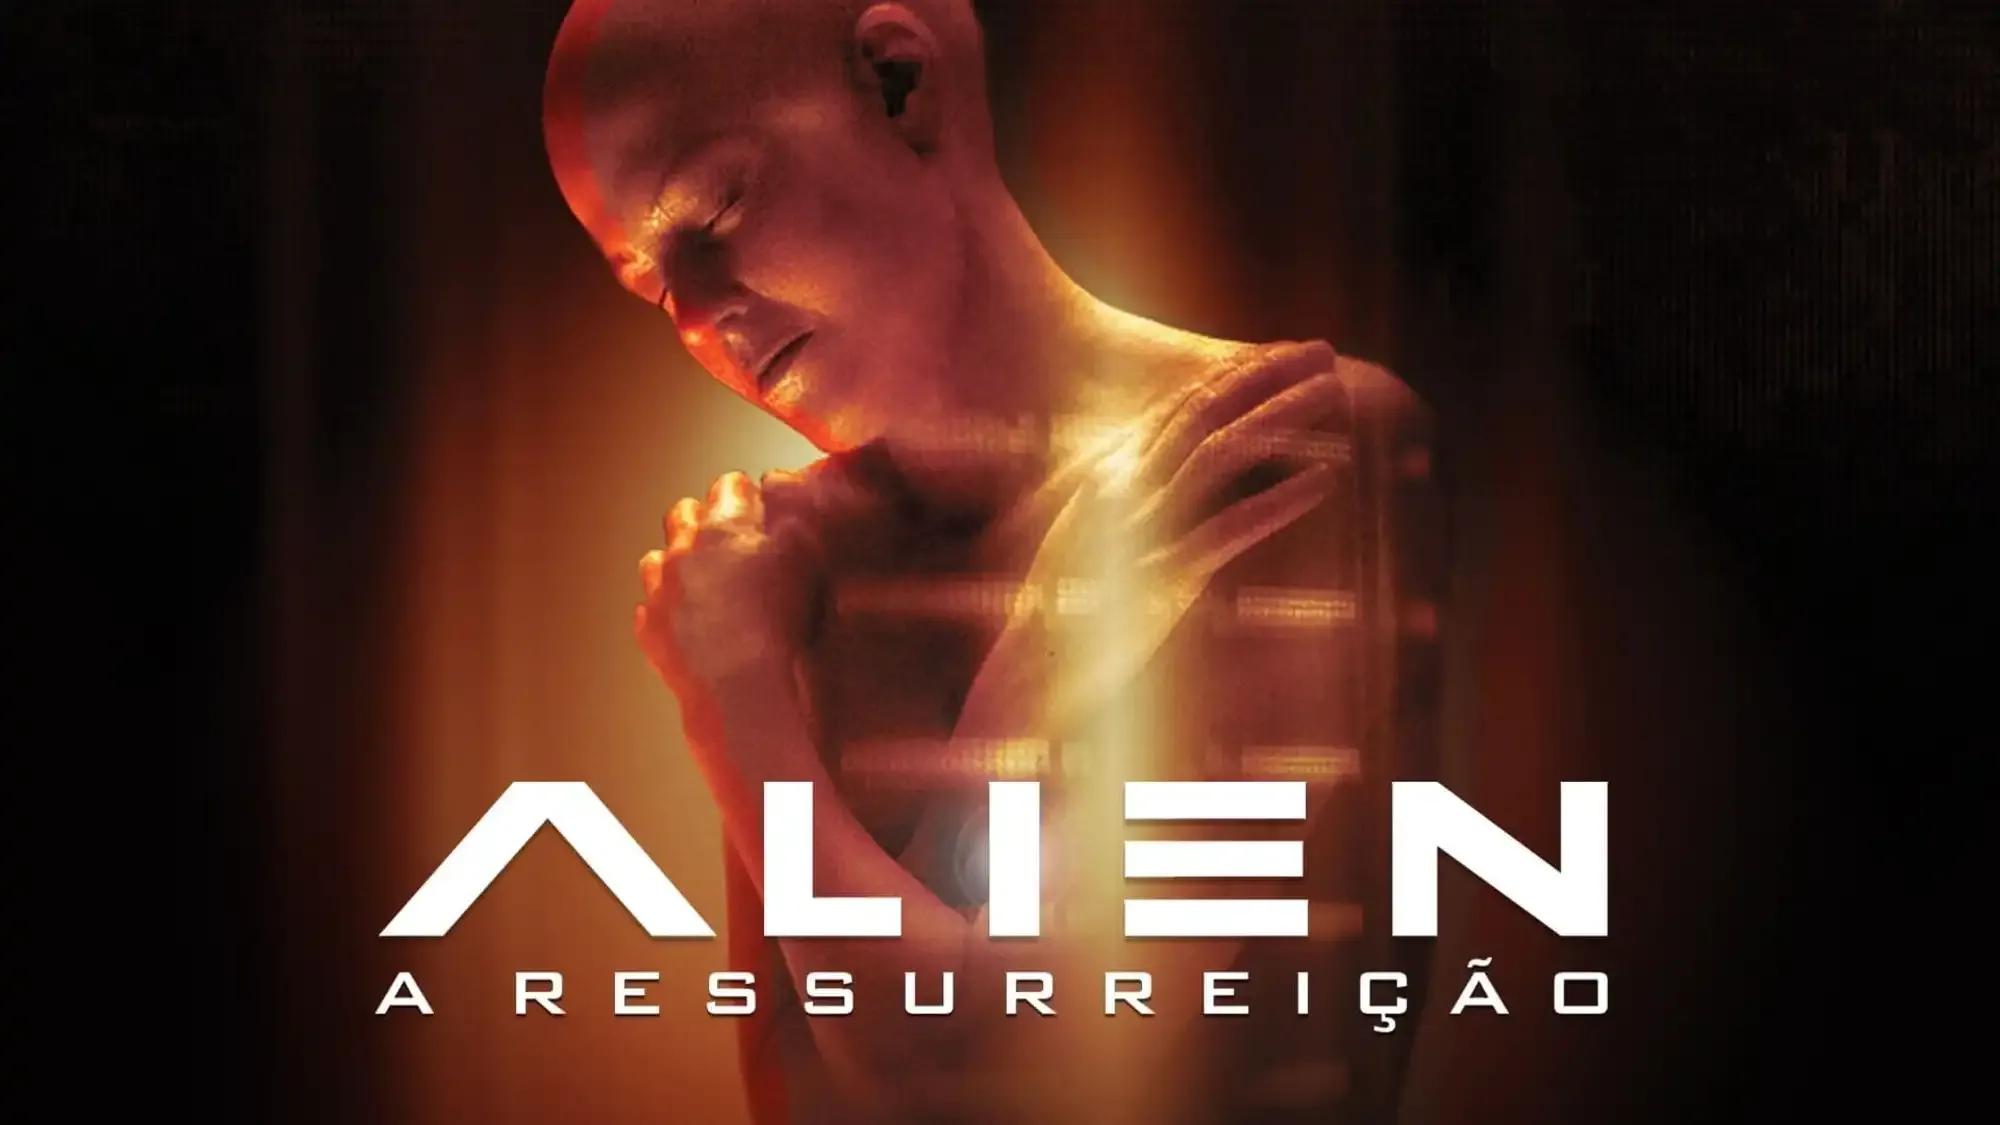 Alien Resurrection movie review